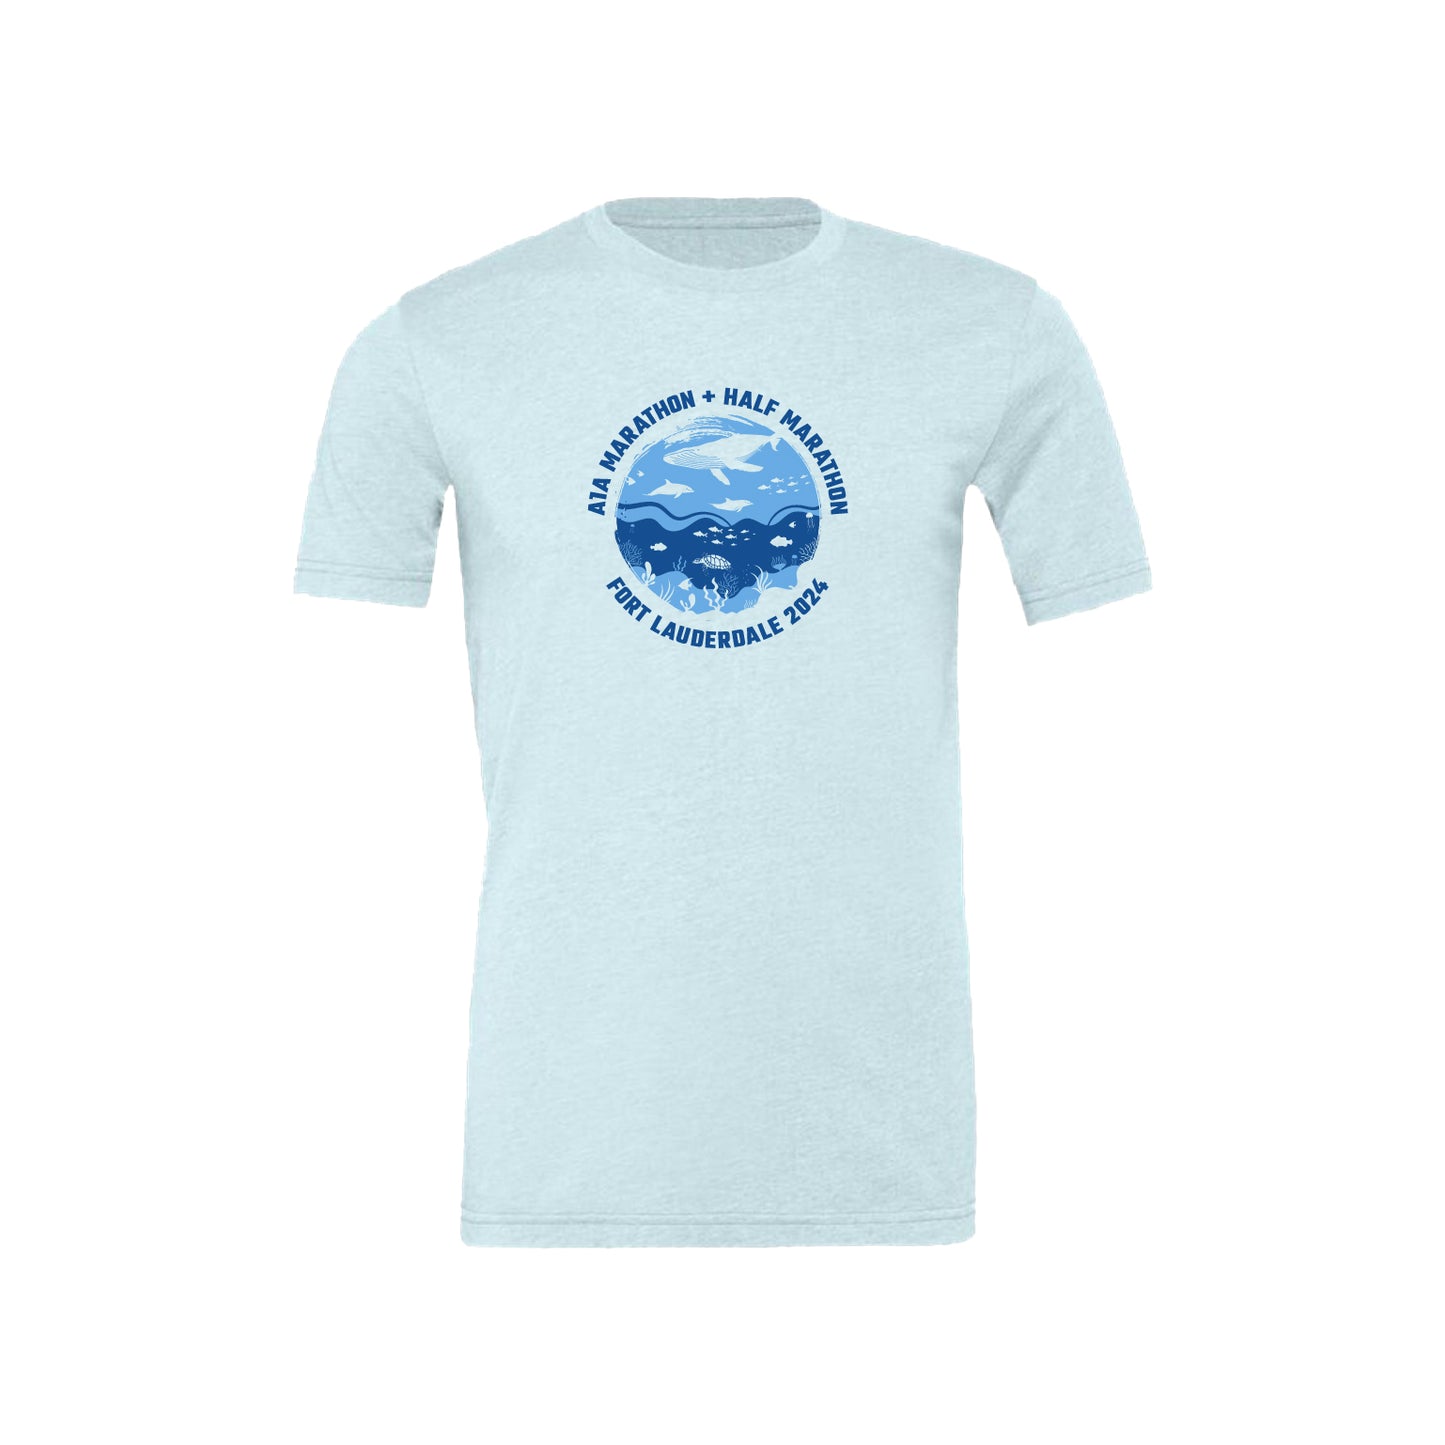 A1A Tri-Blend Short Sleeve Tee Shirt - Unisex - Heather Ice Blue